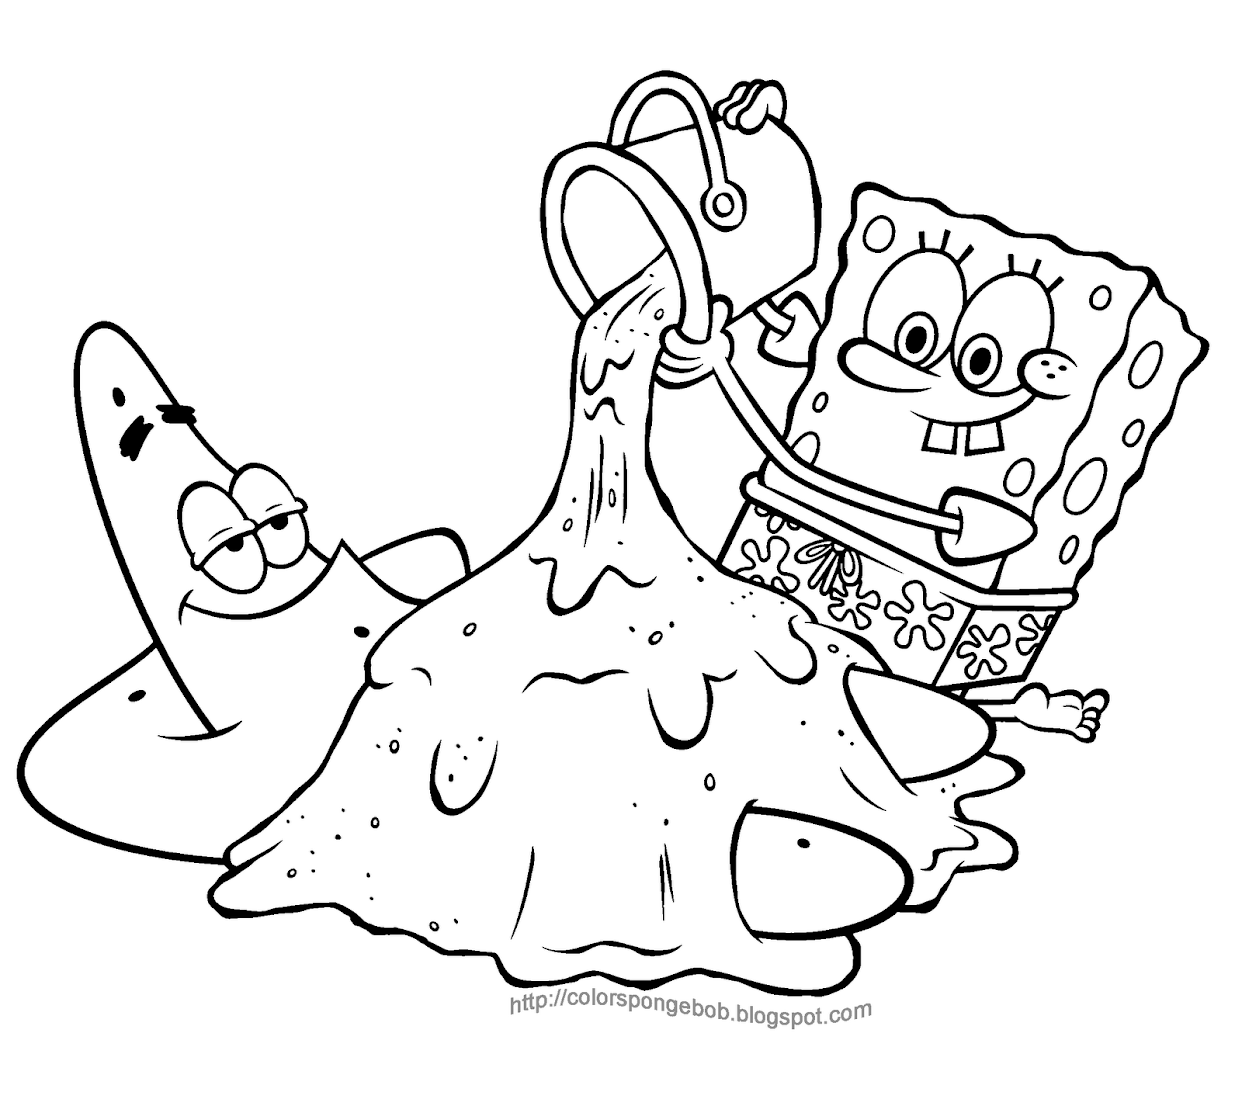 gangster spongebob squarepants coloring pages - photo #42